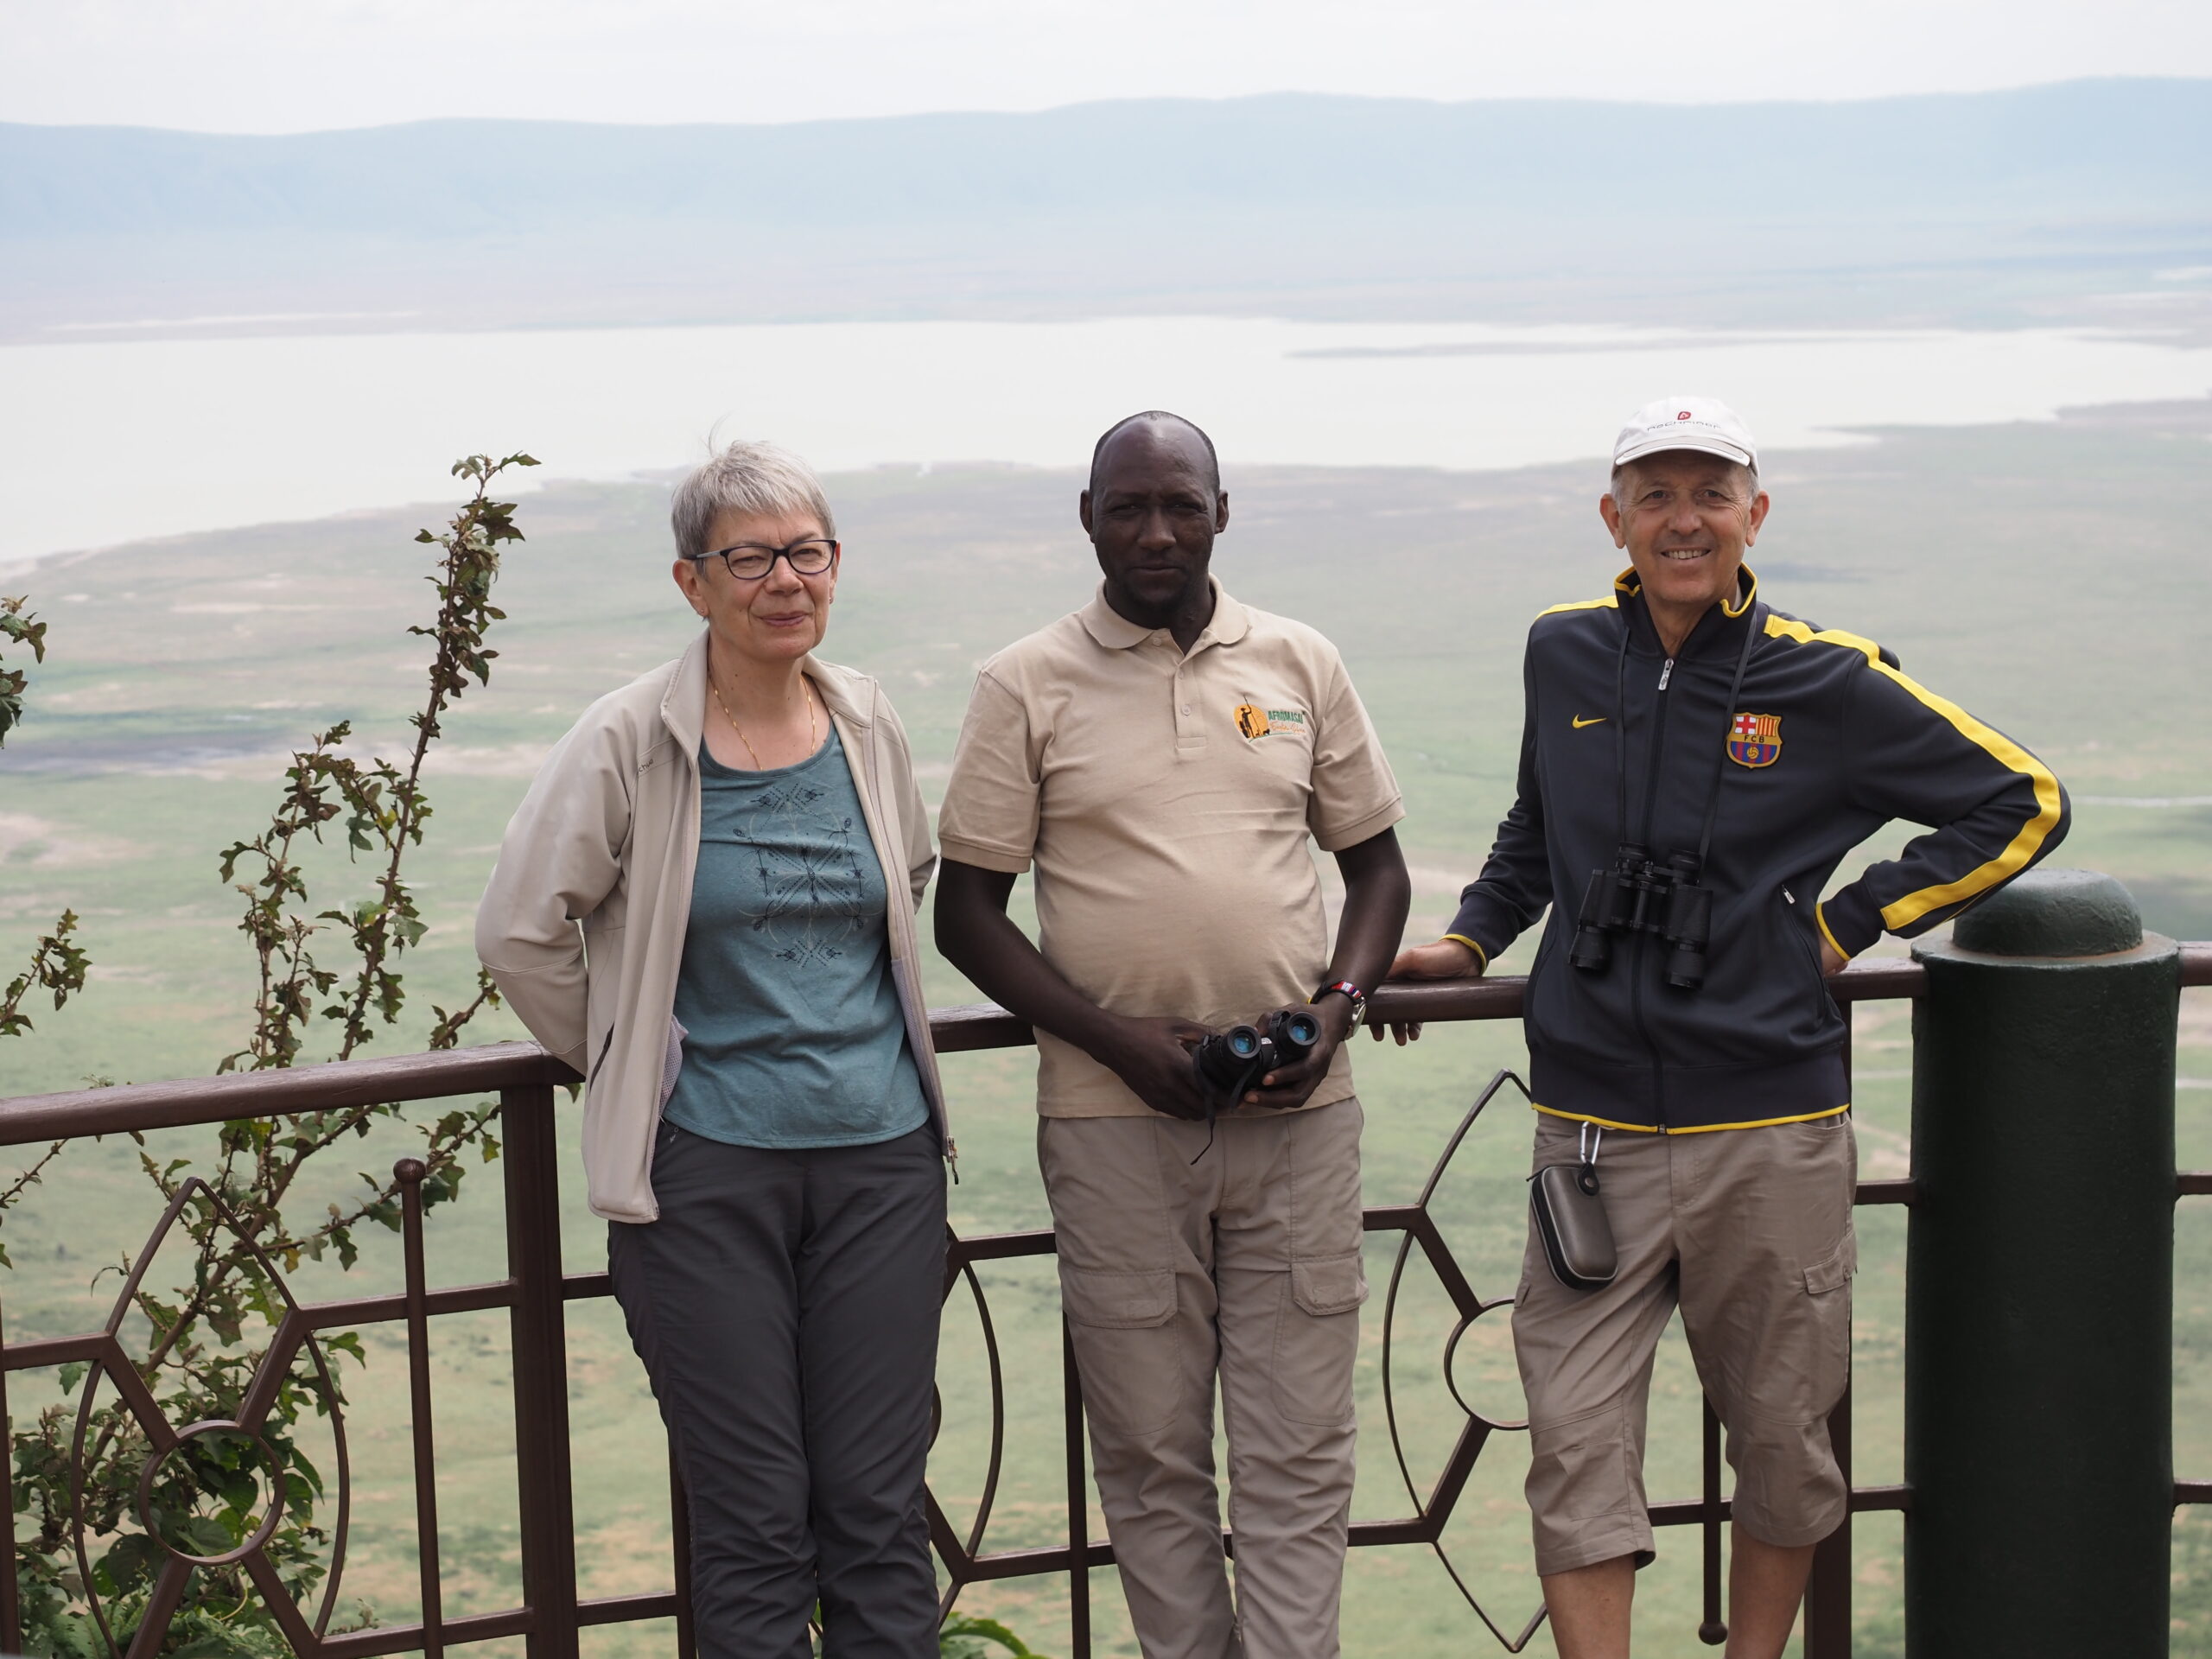 Ngorongoro Crater View with Afro Masai